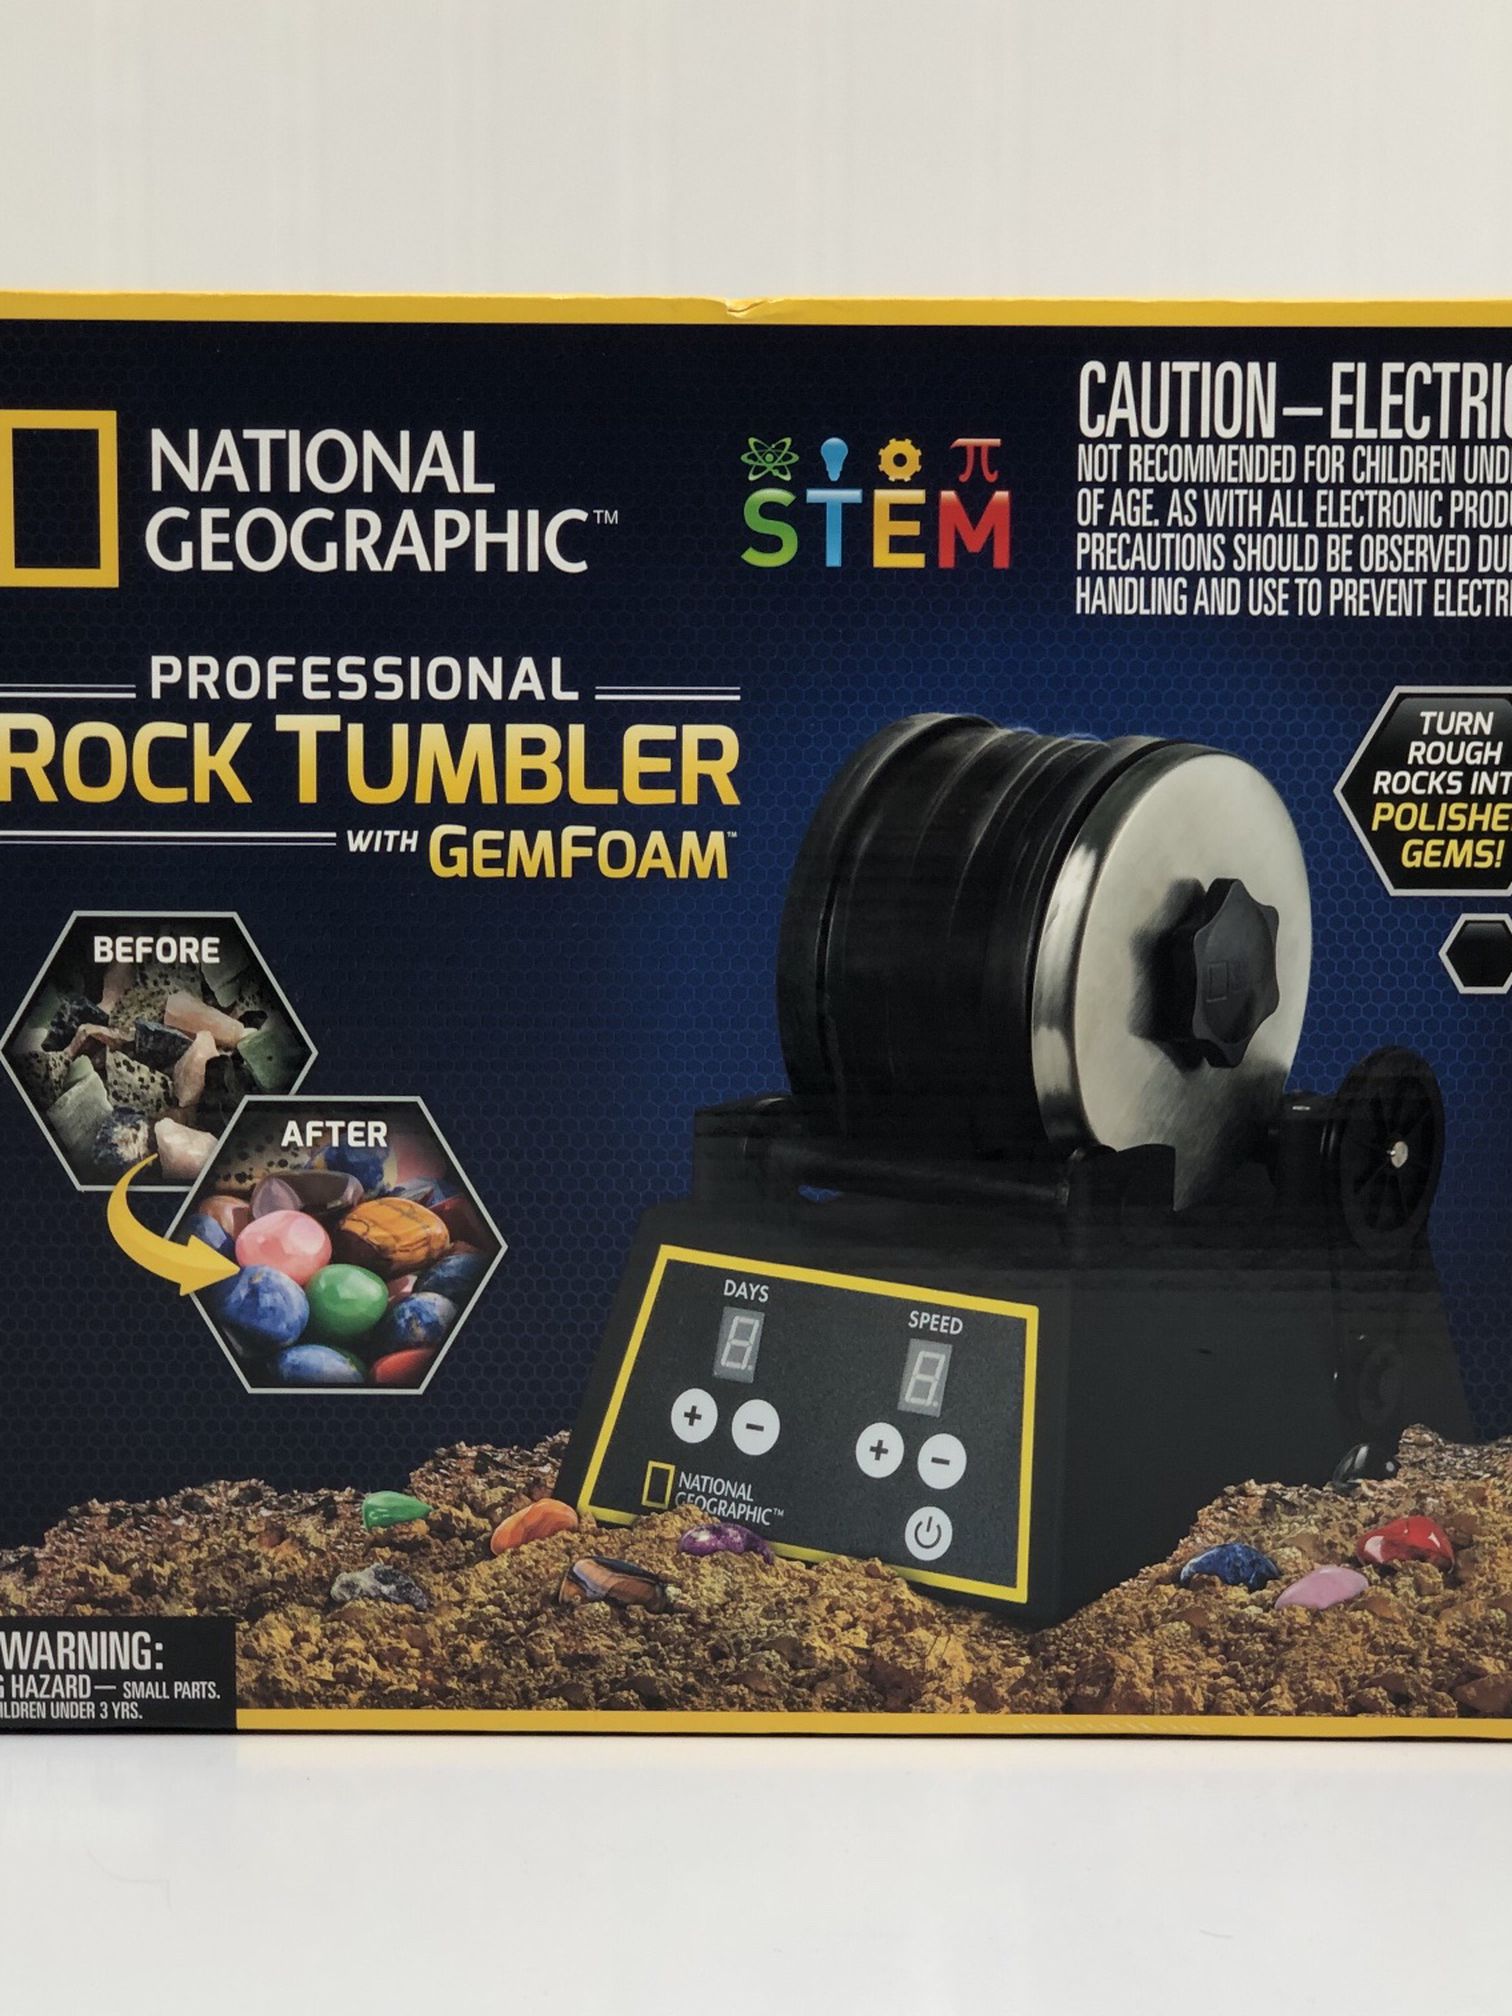 NatGeo Rock Tumbler kit